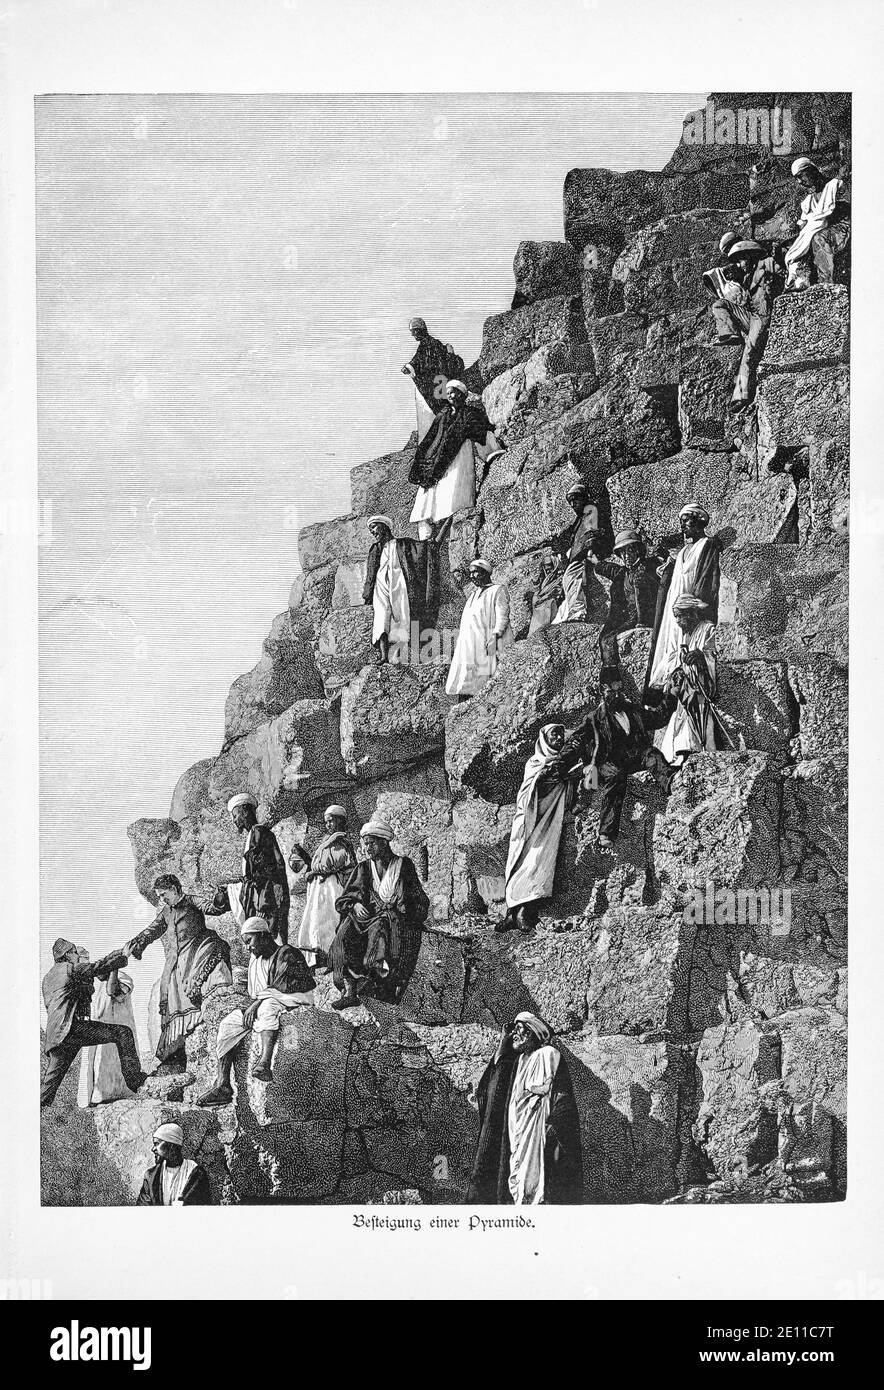 "Besteigung einer Pyramide", che si aggrava a una piramide con molti abitanti del luogo, Gizeh, Cairo, Egitto, "Die Hauptstädte der Welt". Breslau circa 1987 Foto Stock